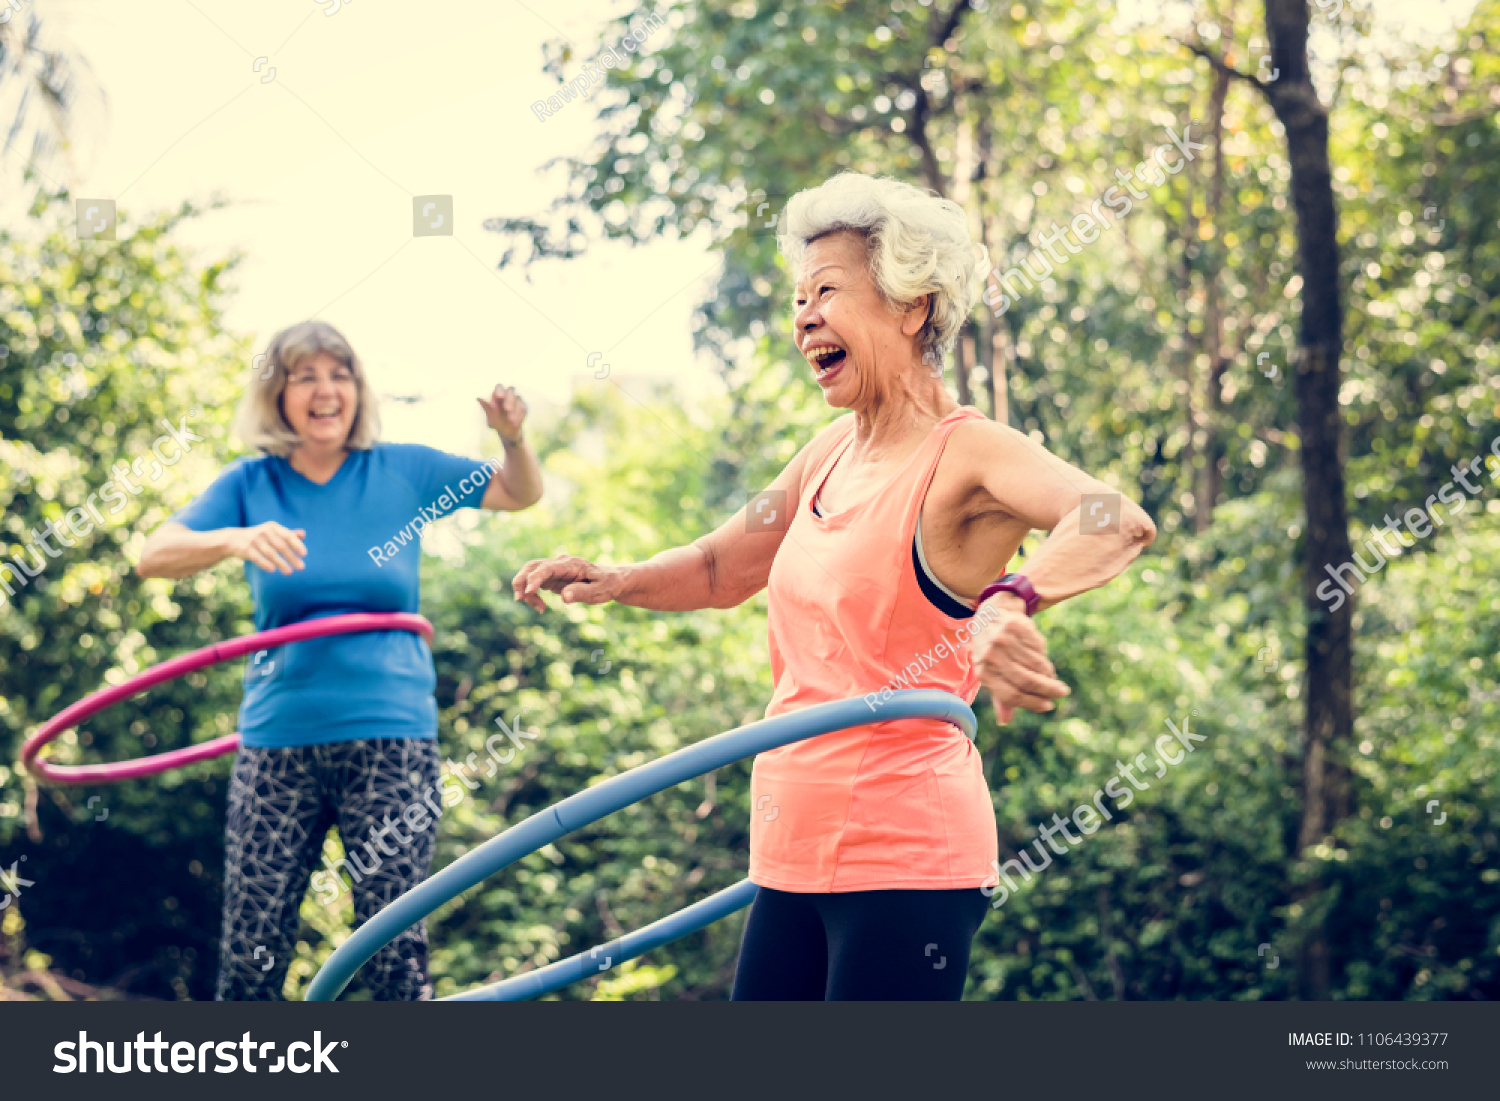 Senior woman exercising with a hula hoop #1106439377